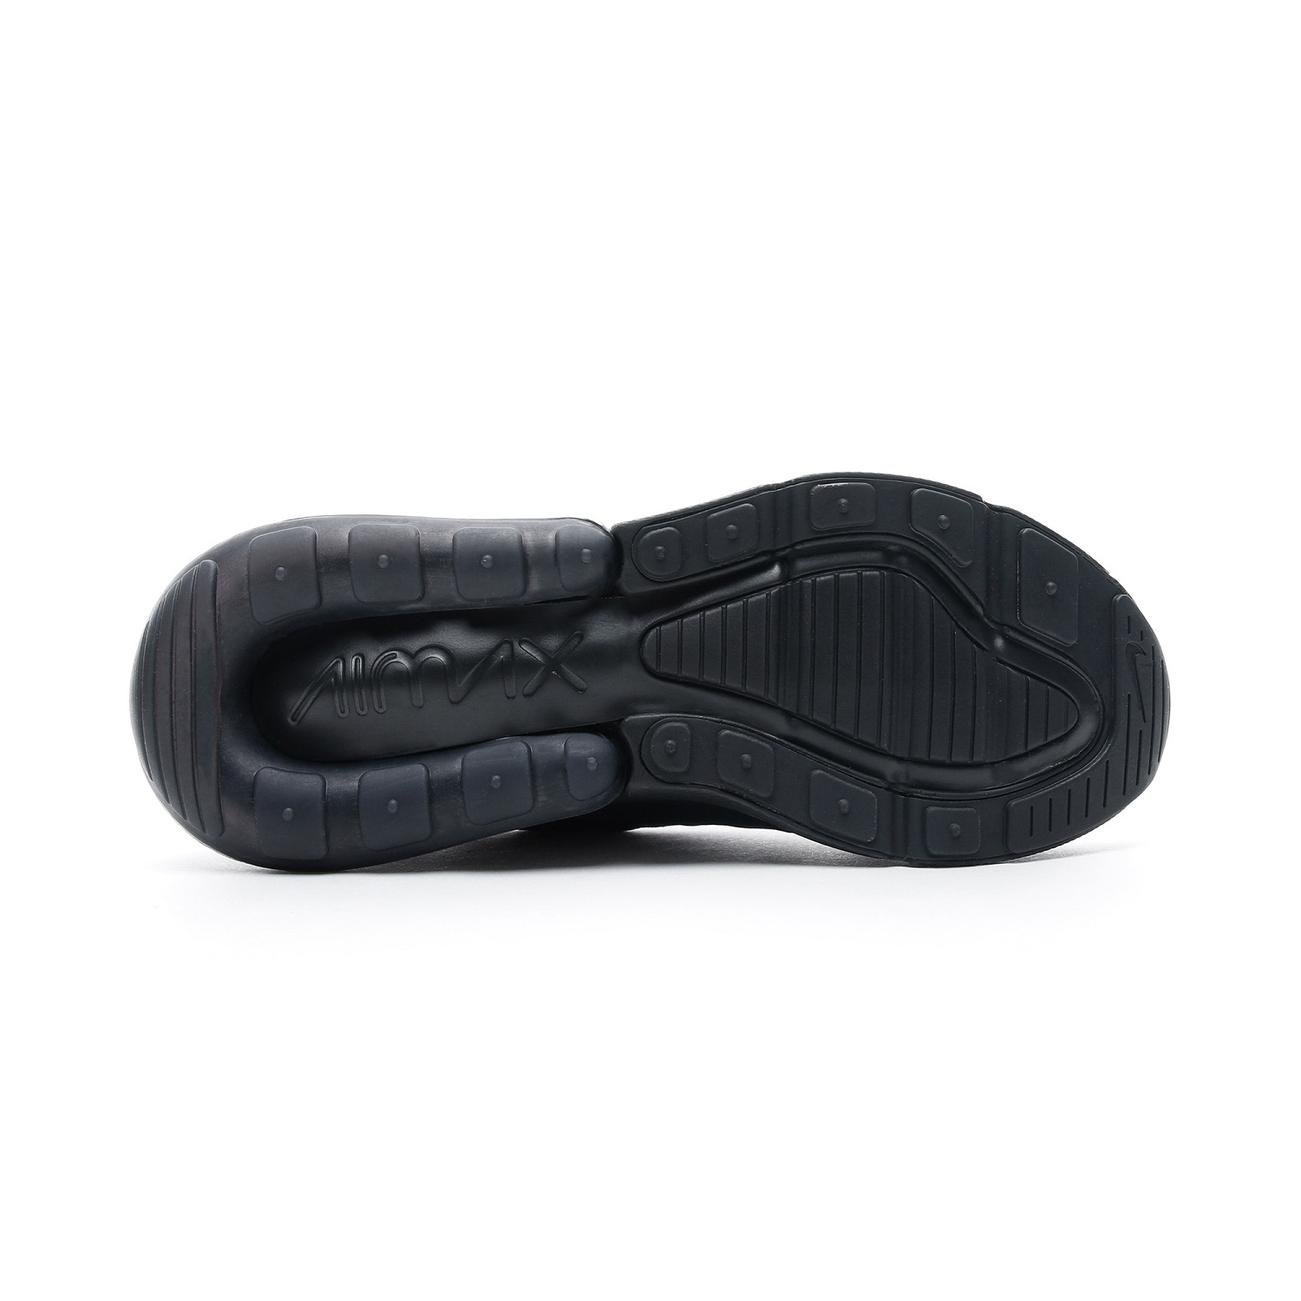  Nike Air Max 270 Unisex Siyah Spor Ayakkabı